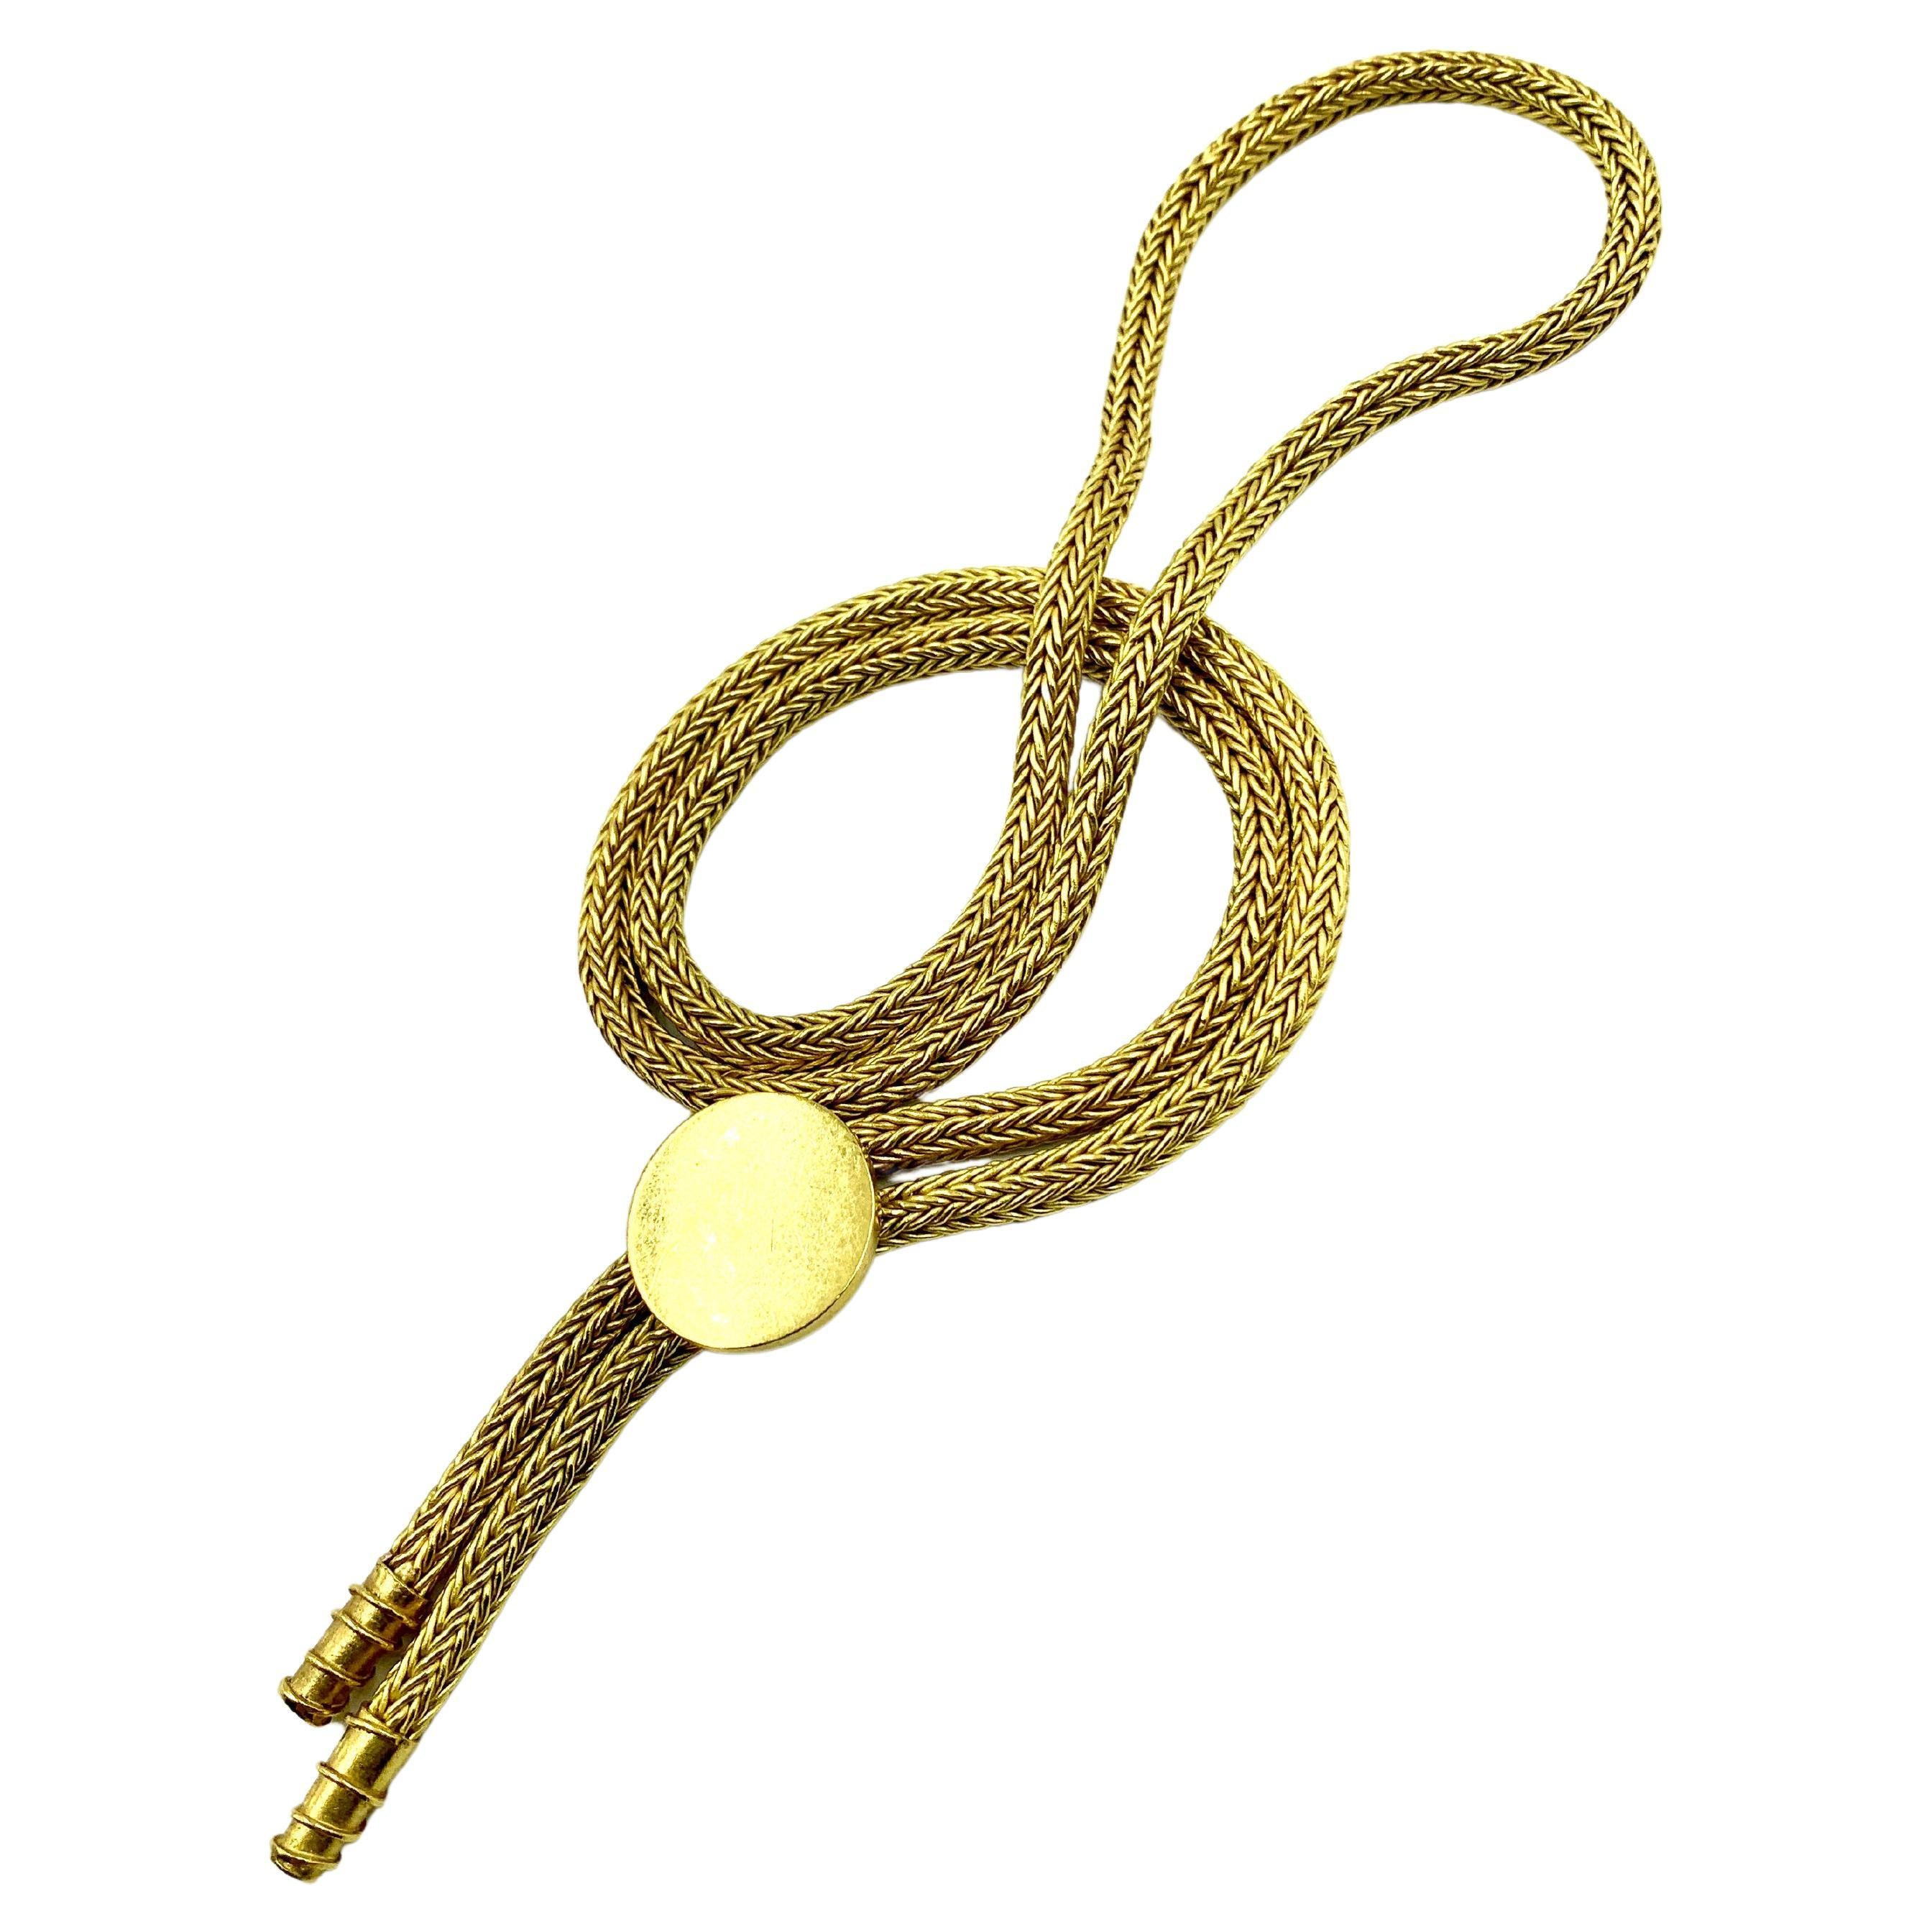 Rare Cowboy Core Vintage 22K Yellow Gold Bolo Tie Necklace by Luna Felix